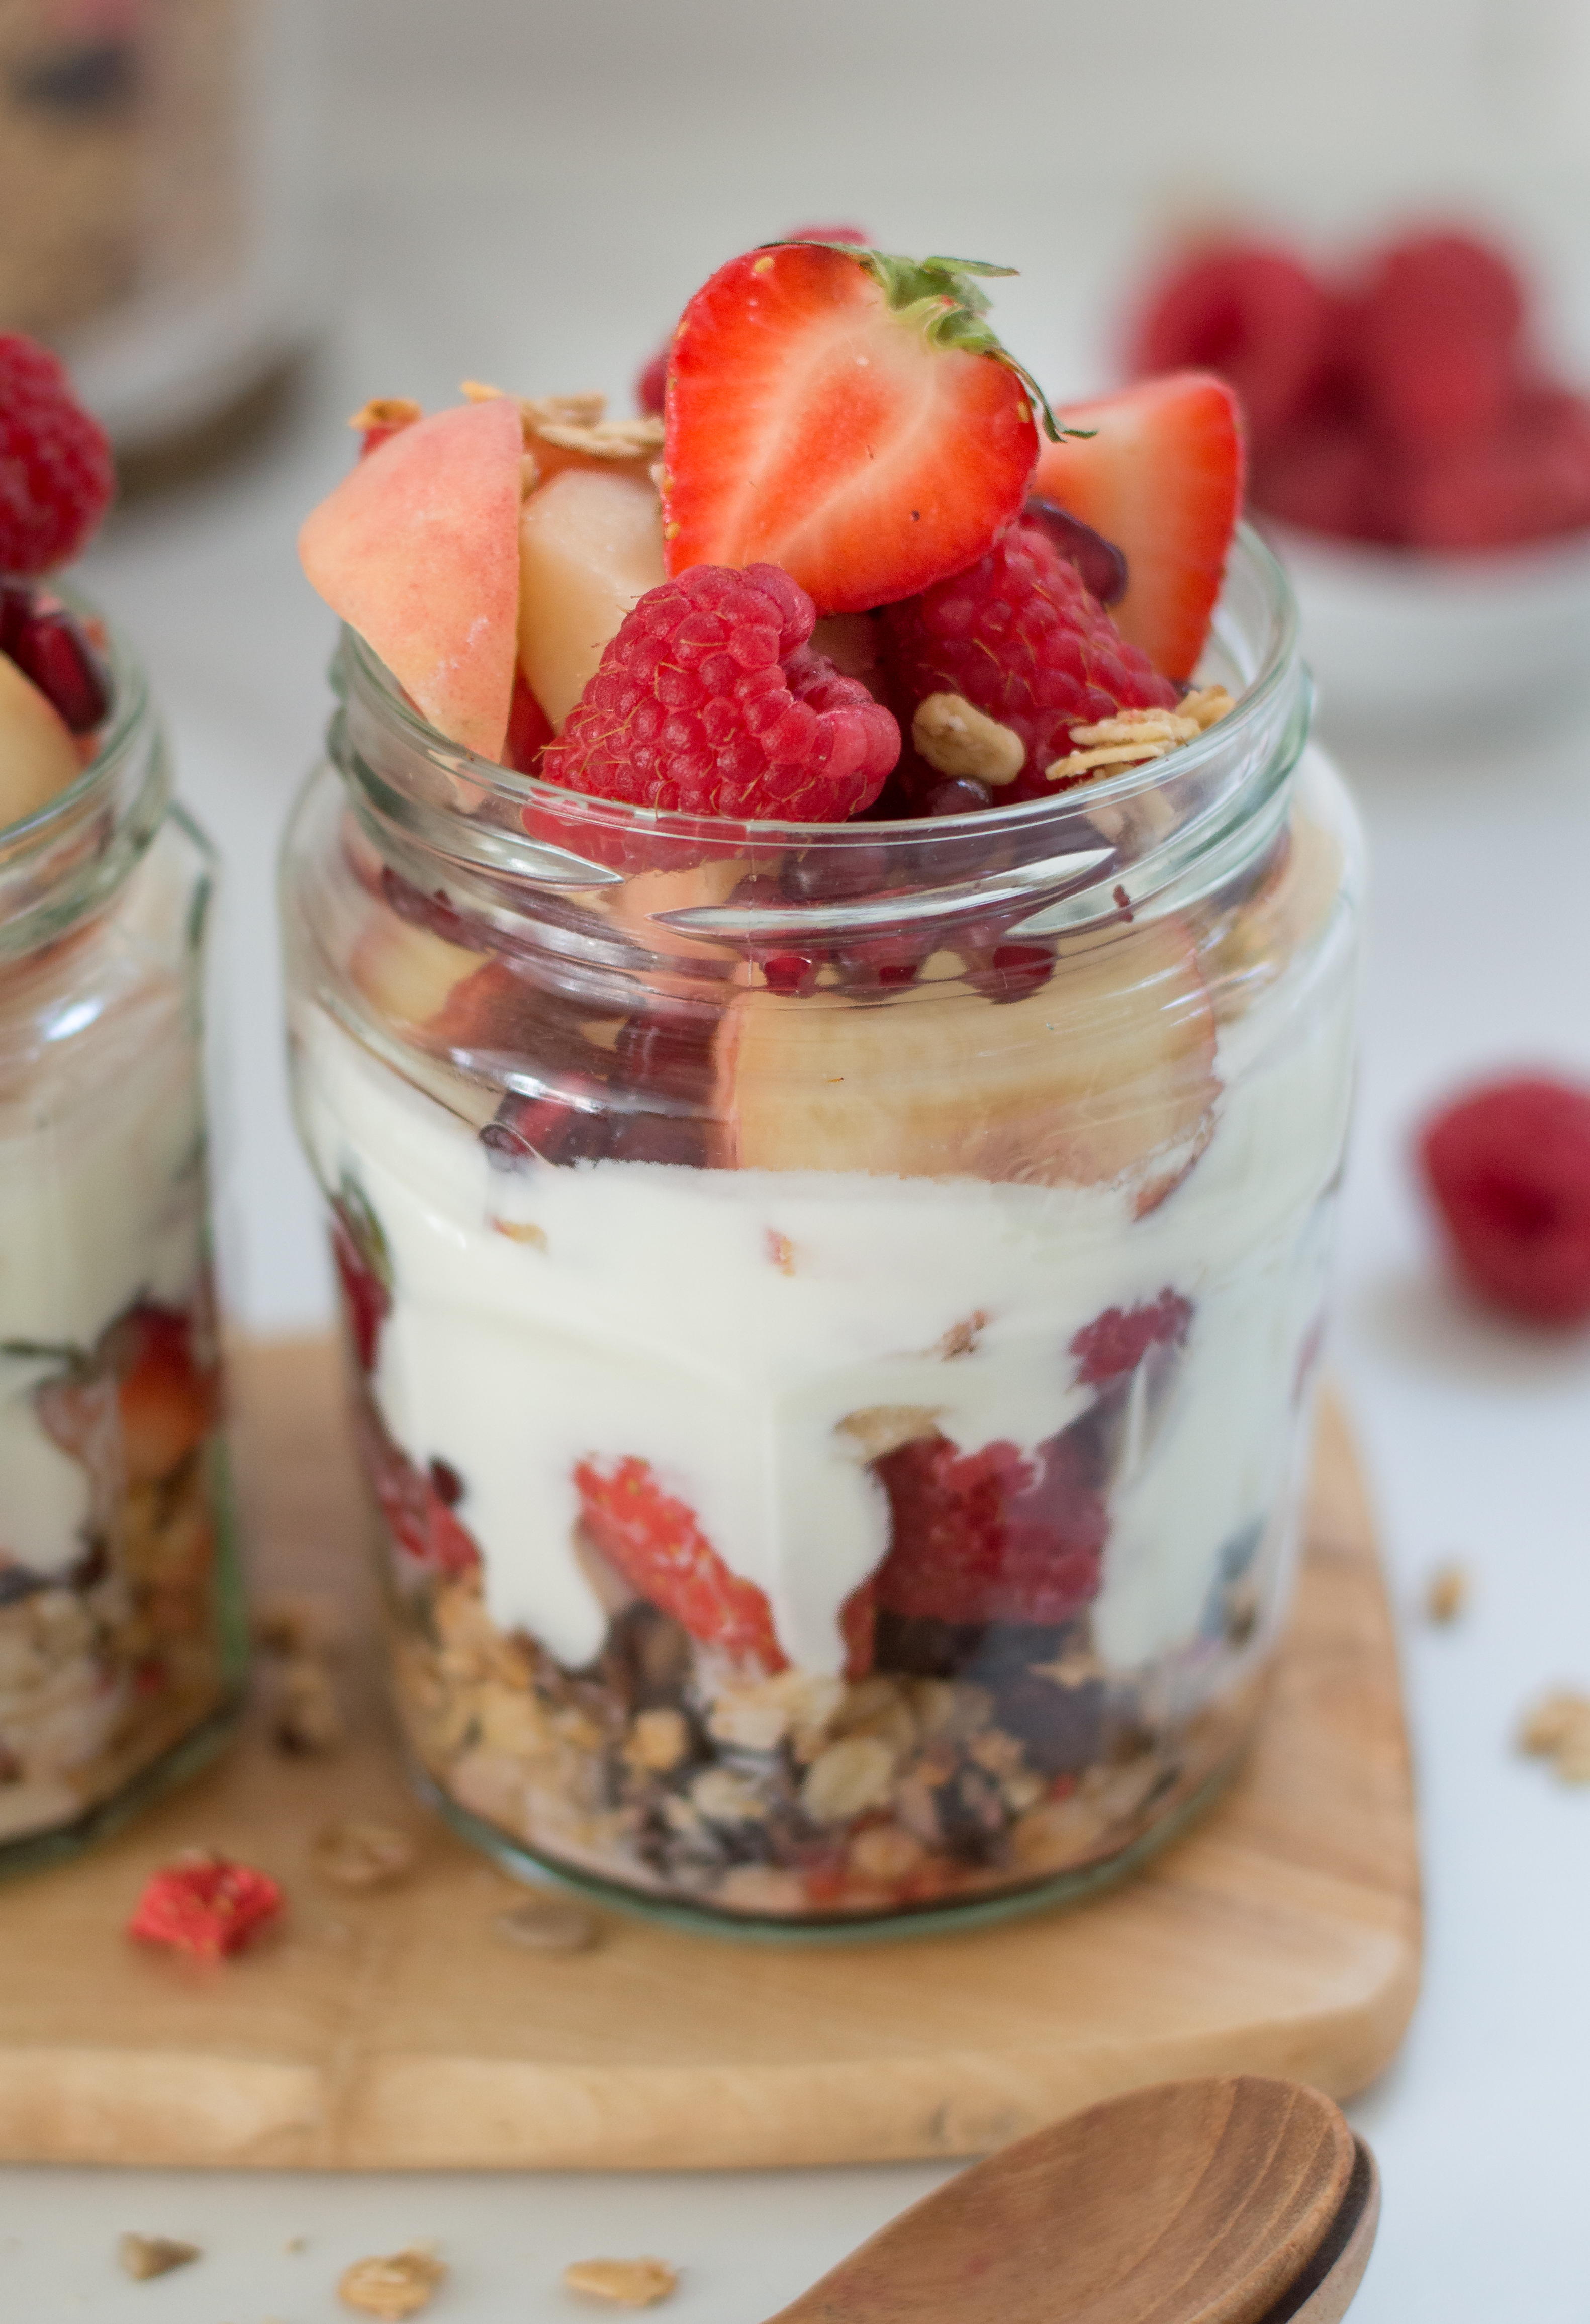 Summer berry crunch #healthybreakfast #breakfastonthego #healthyrecipes